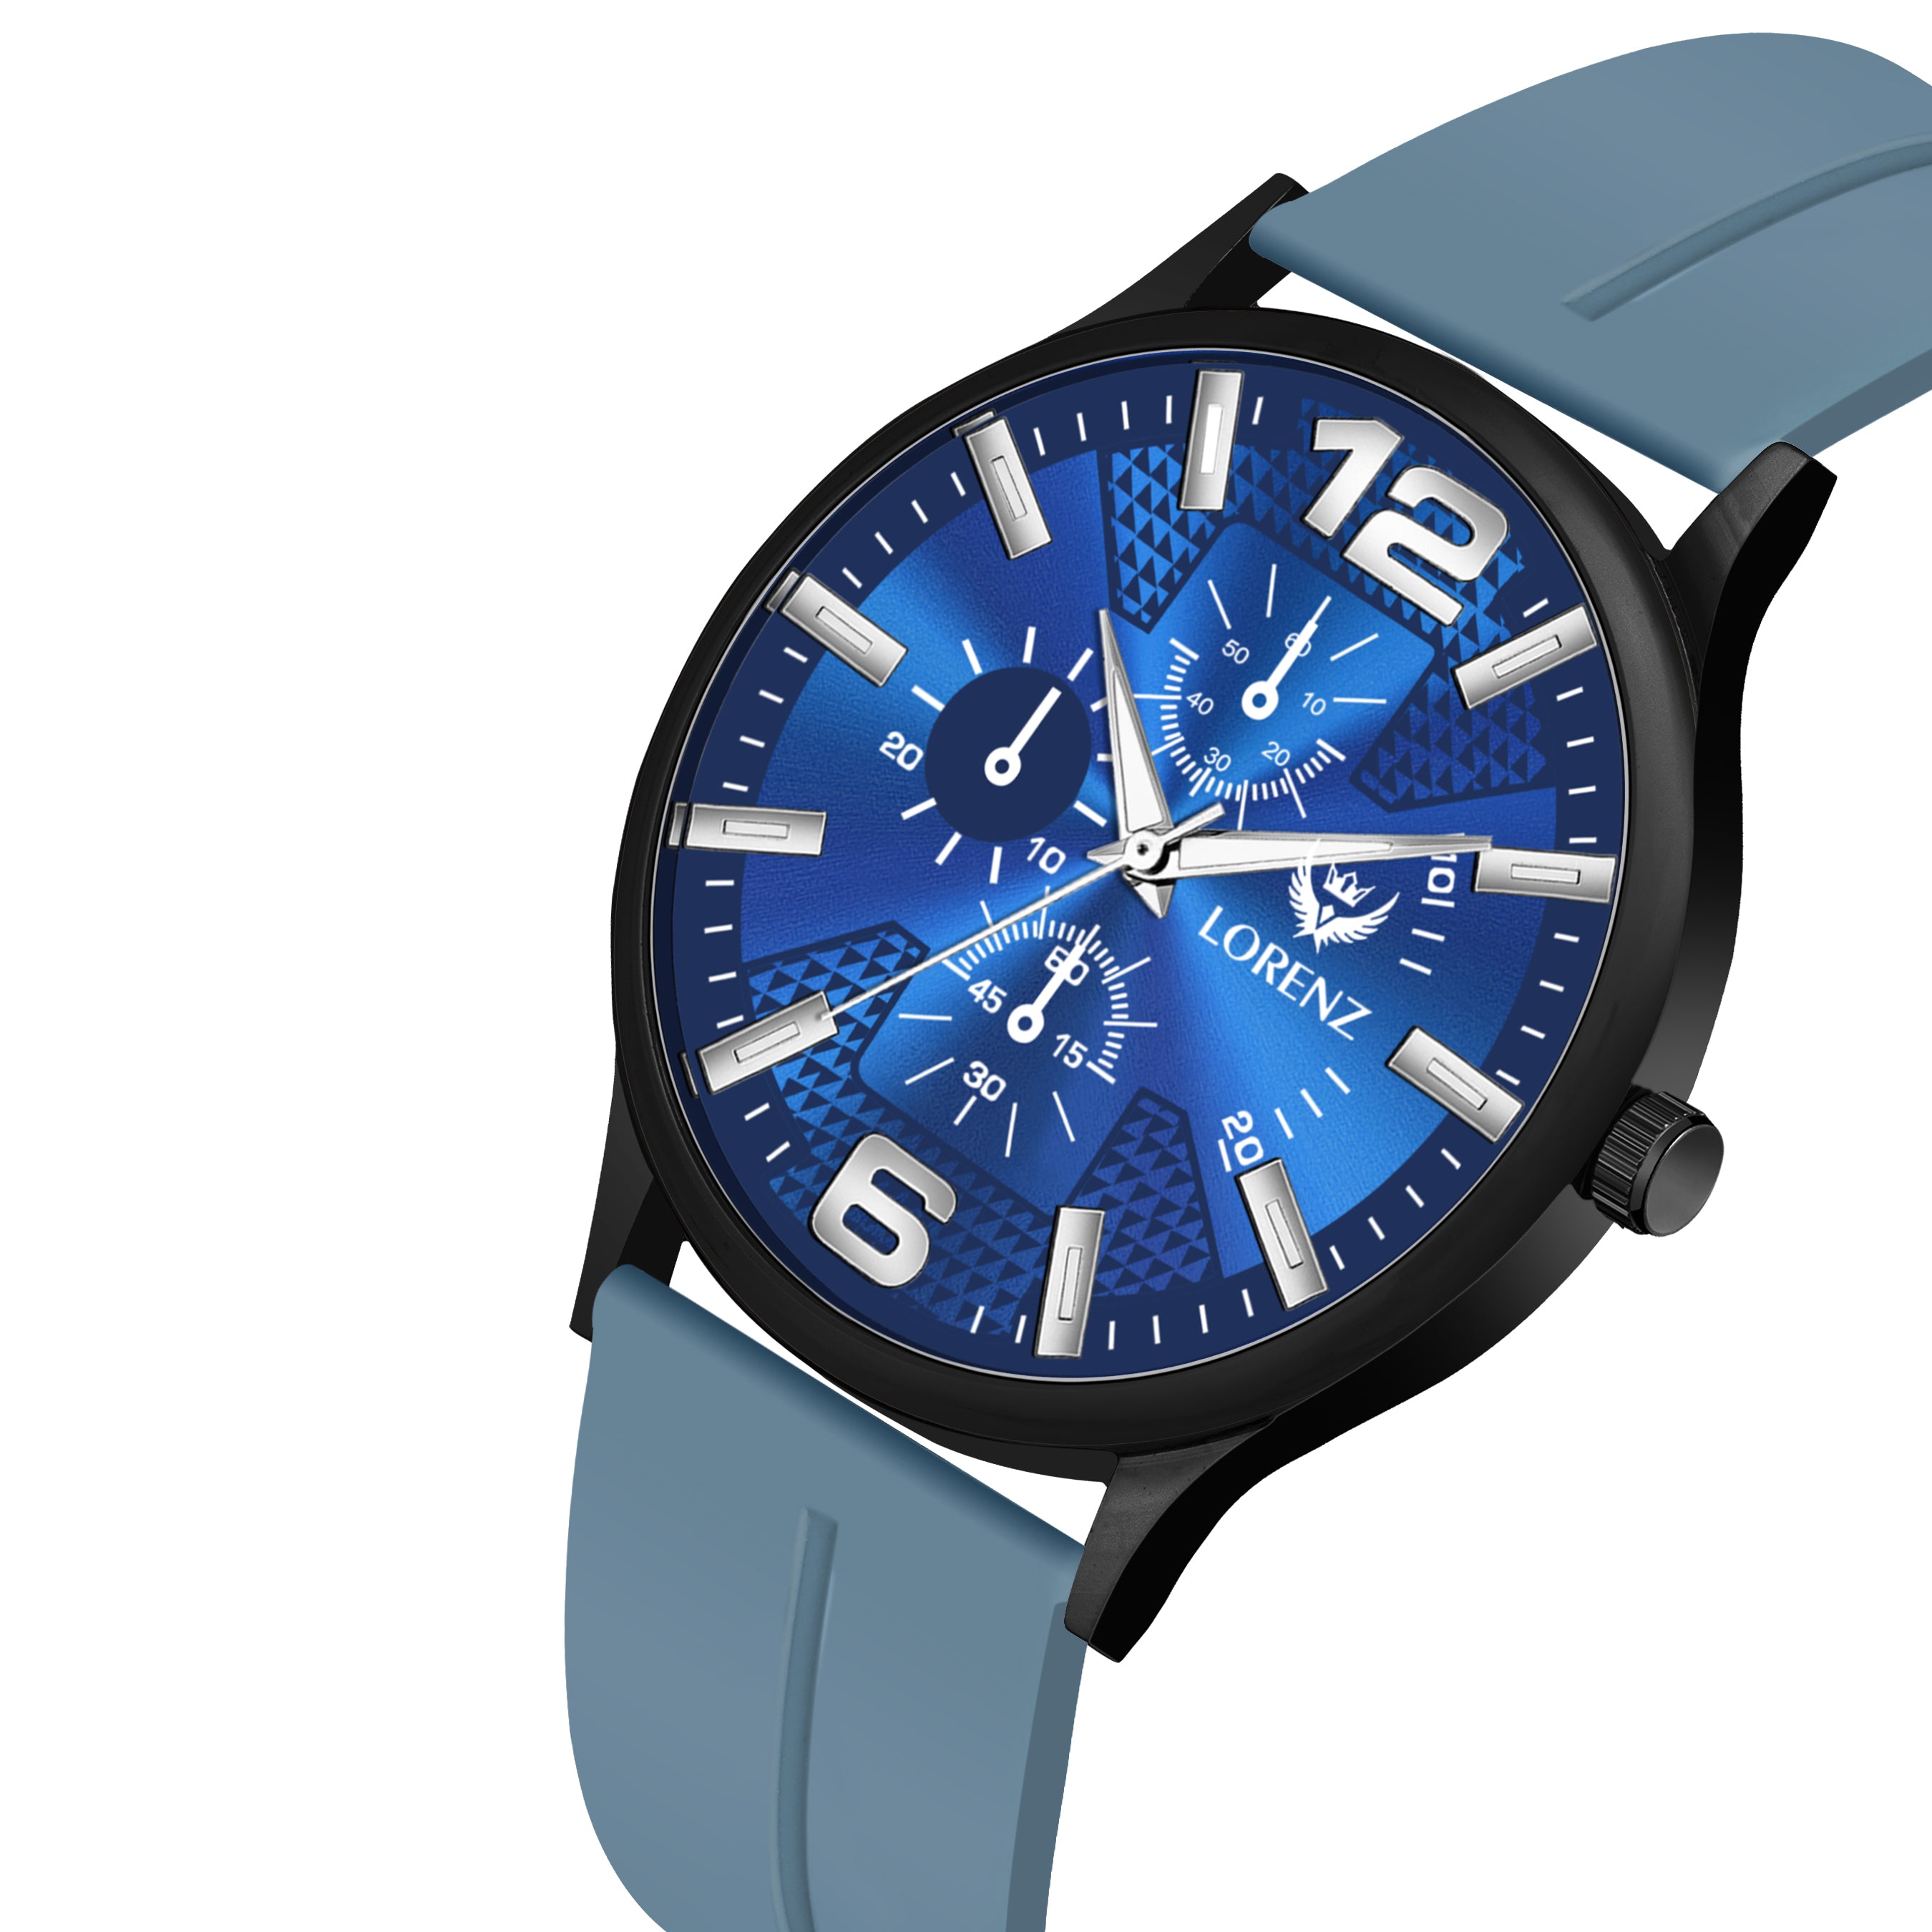 Lorenz Slim Analog Watch with Blue Magnetic Strap